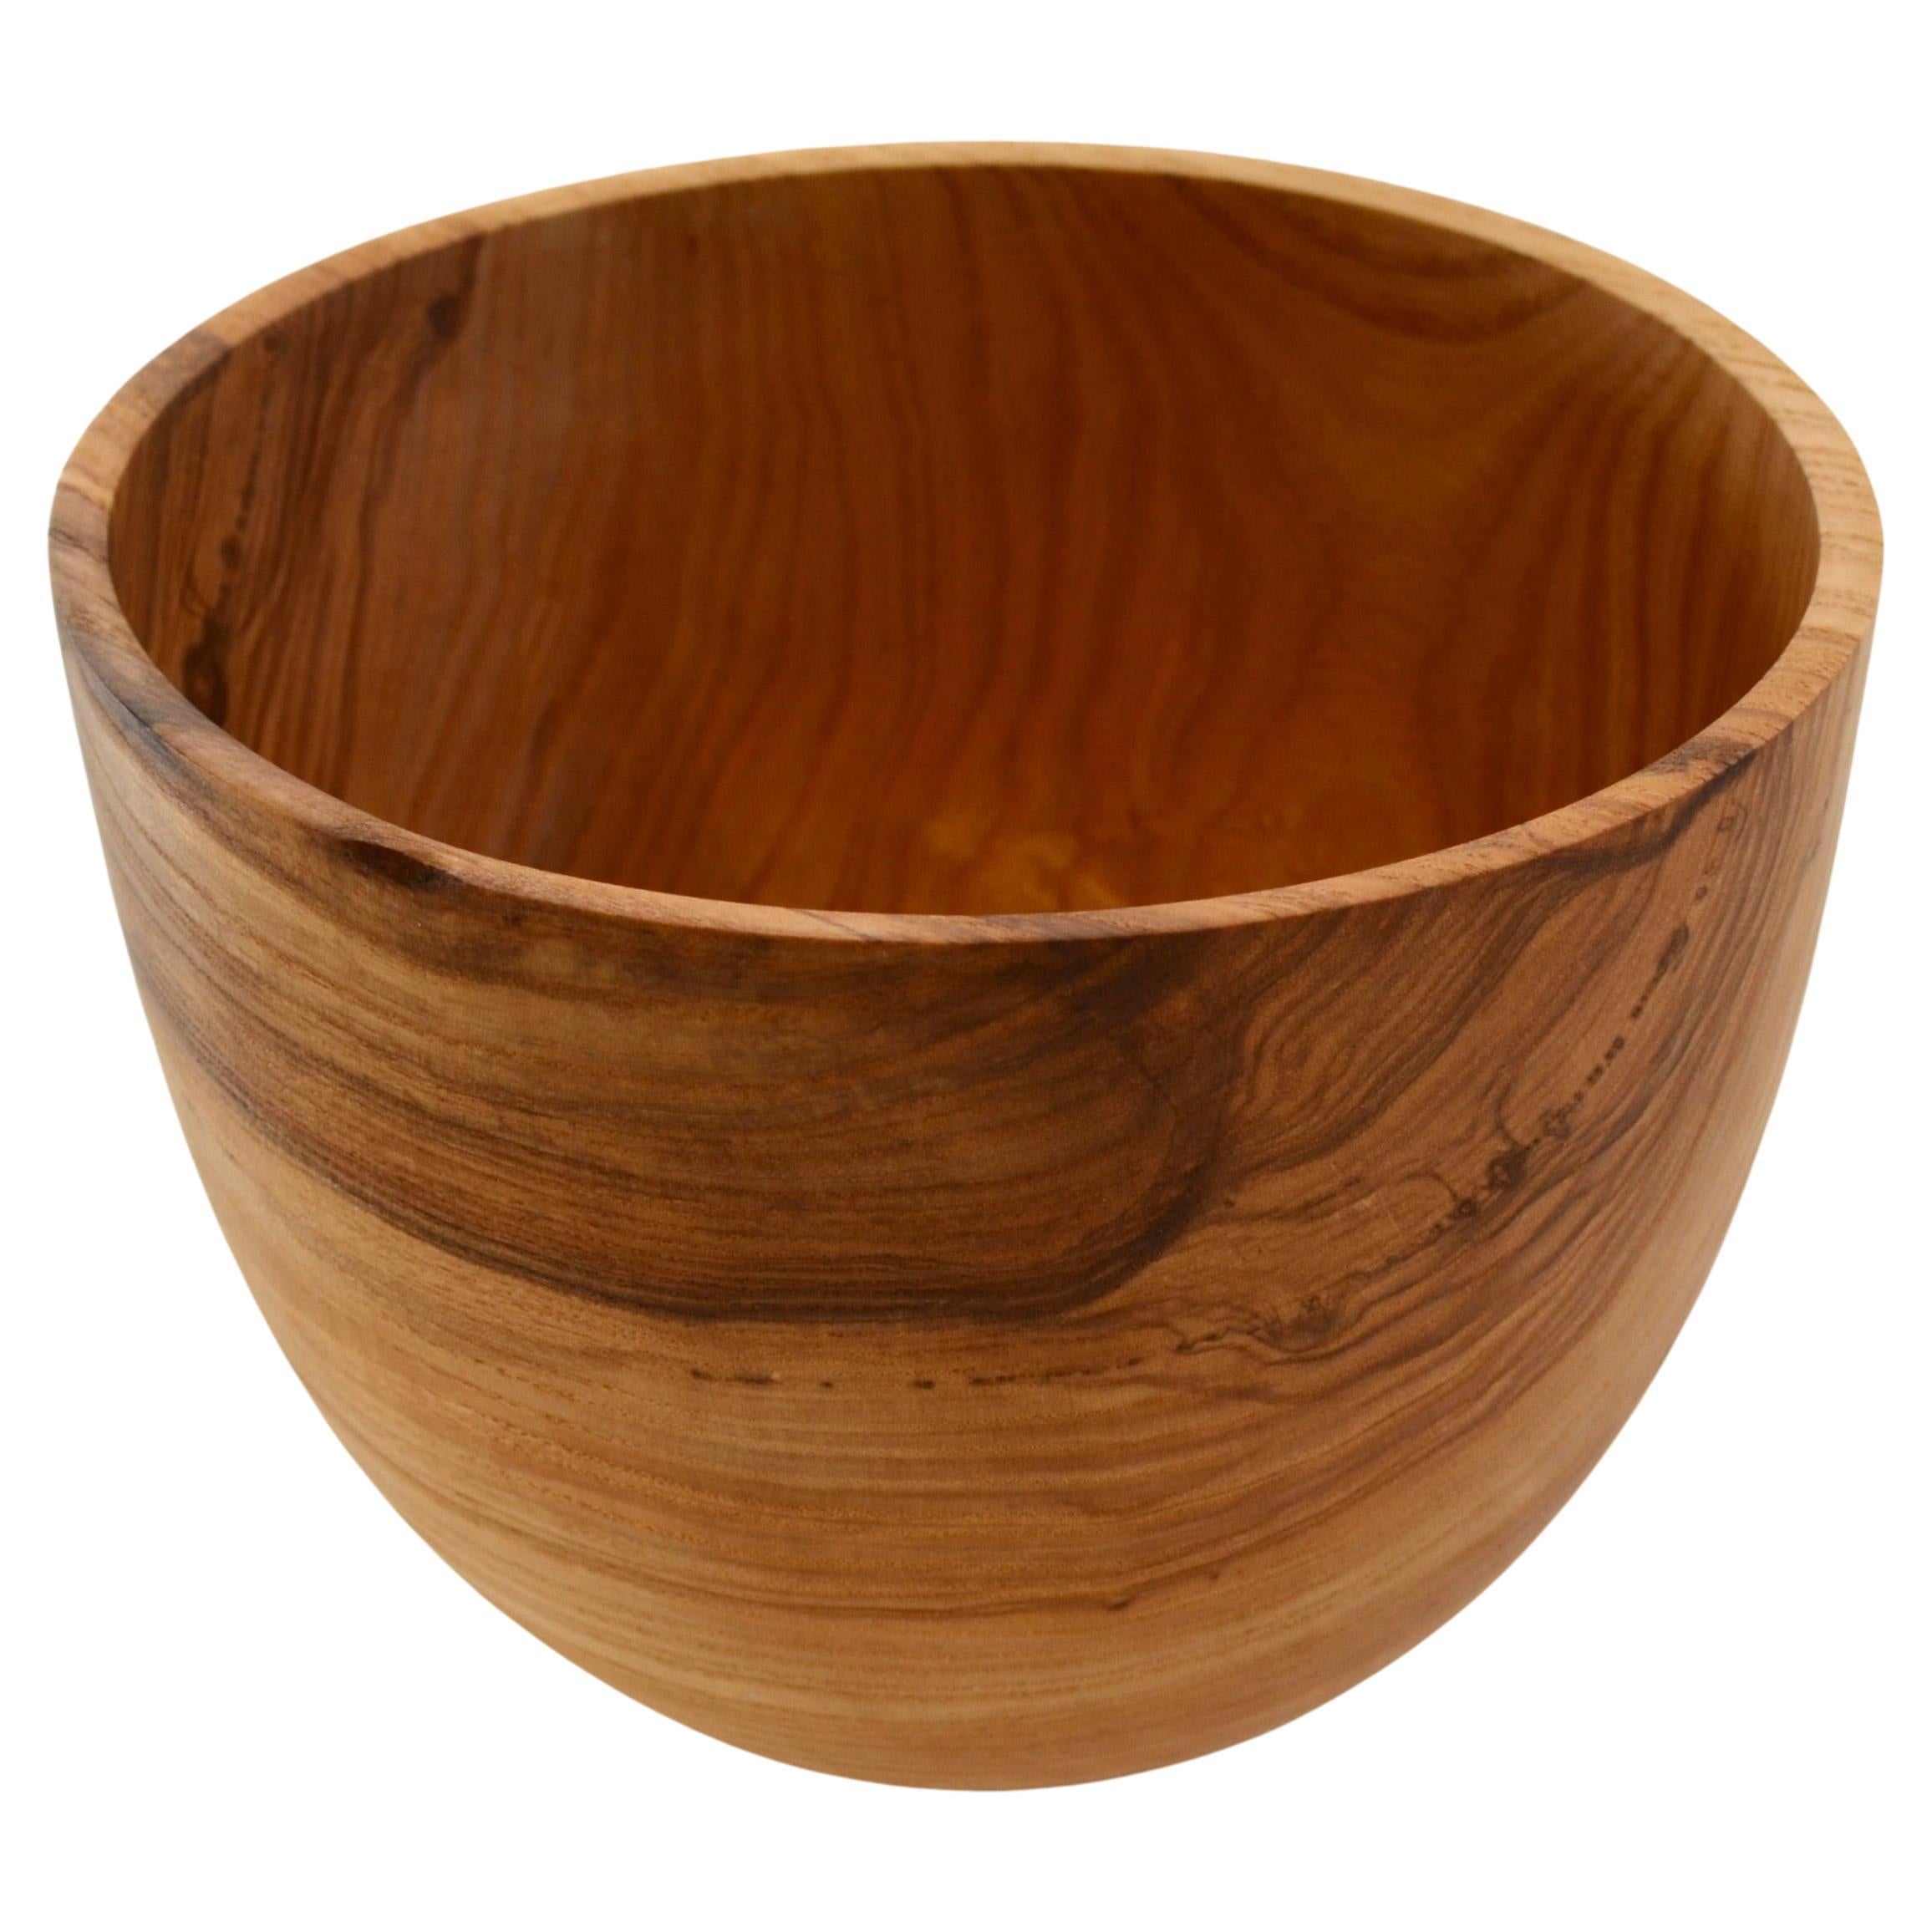 Hand-Carved Natural Ash Wood Bowl For Sale